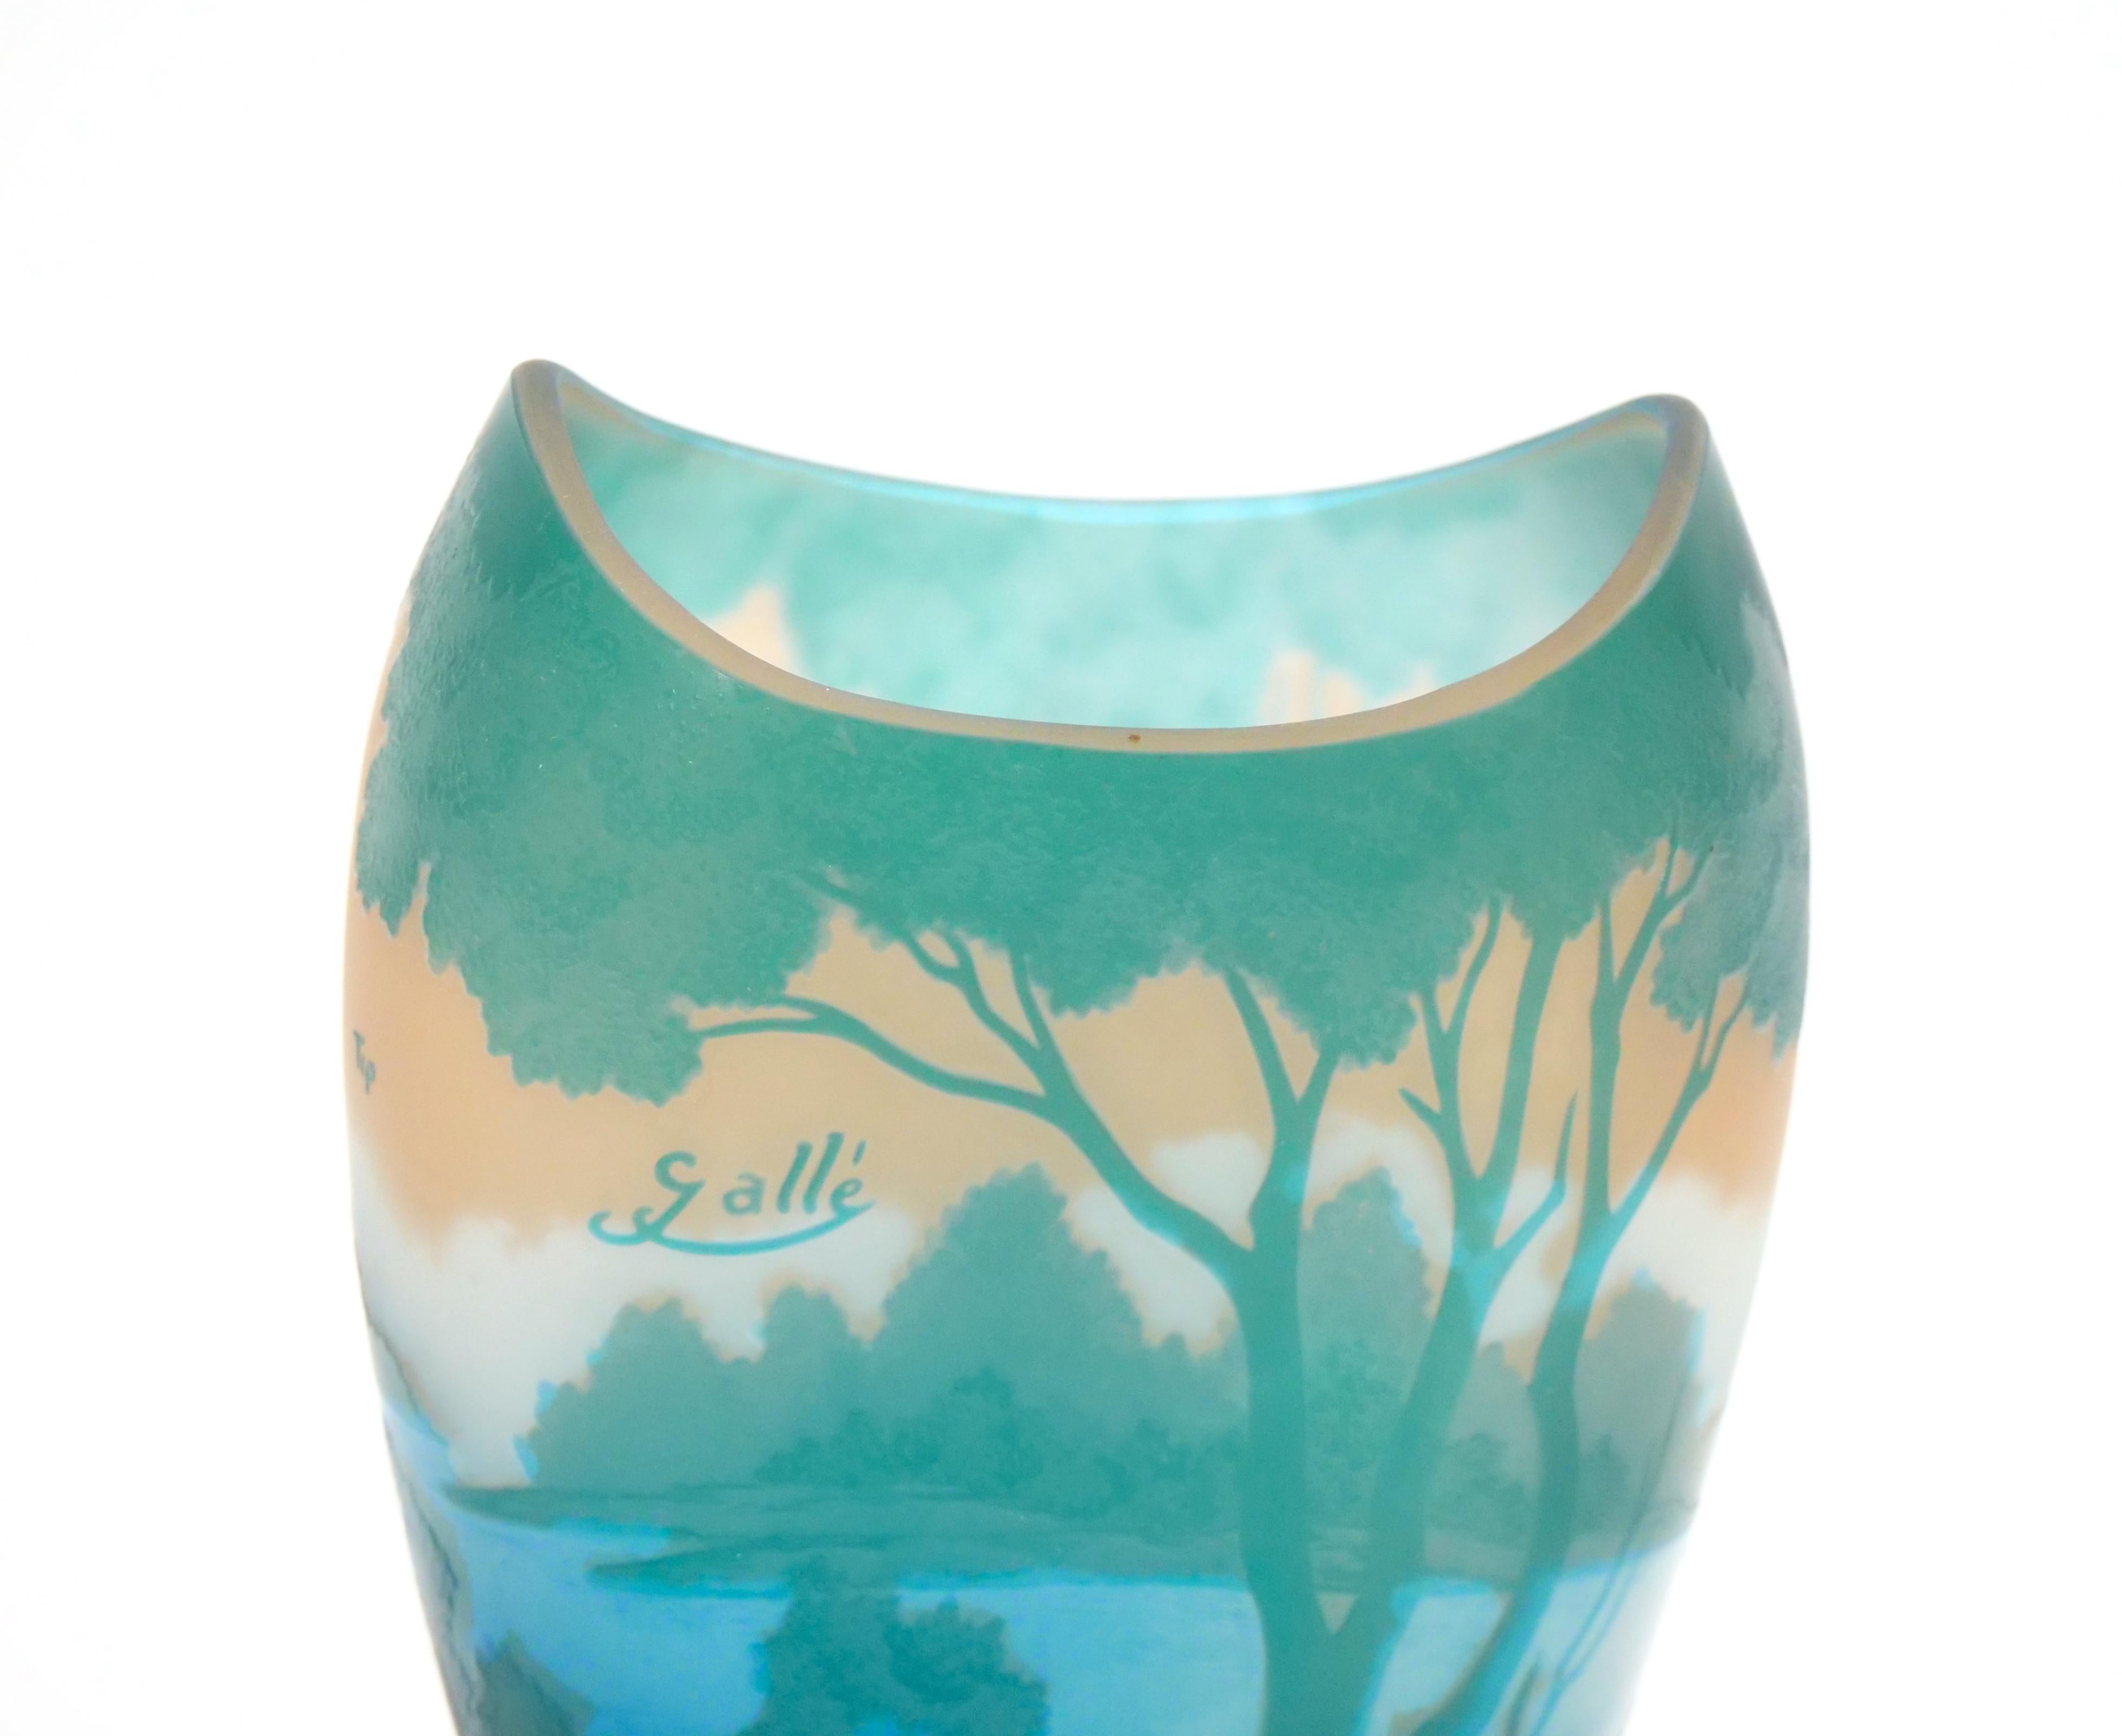 Engraved Galle Turquoise Cameo Glass Art Nouveau Decorative Vase For Sale